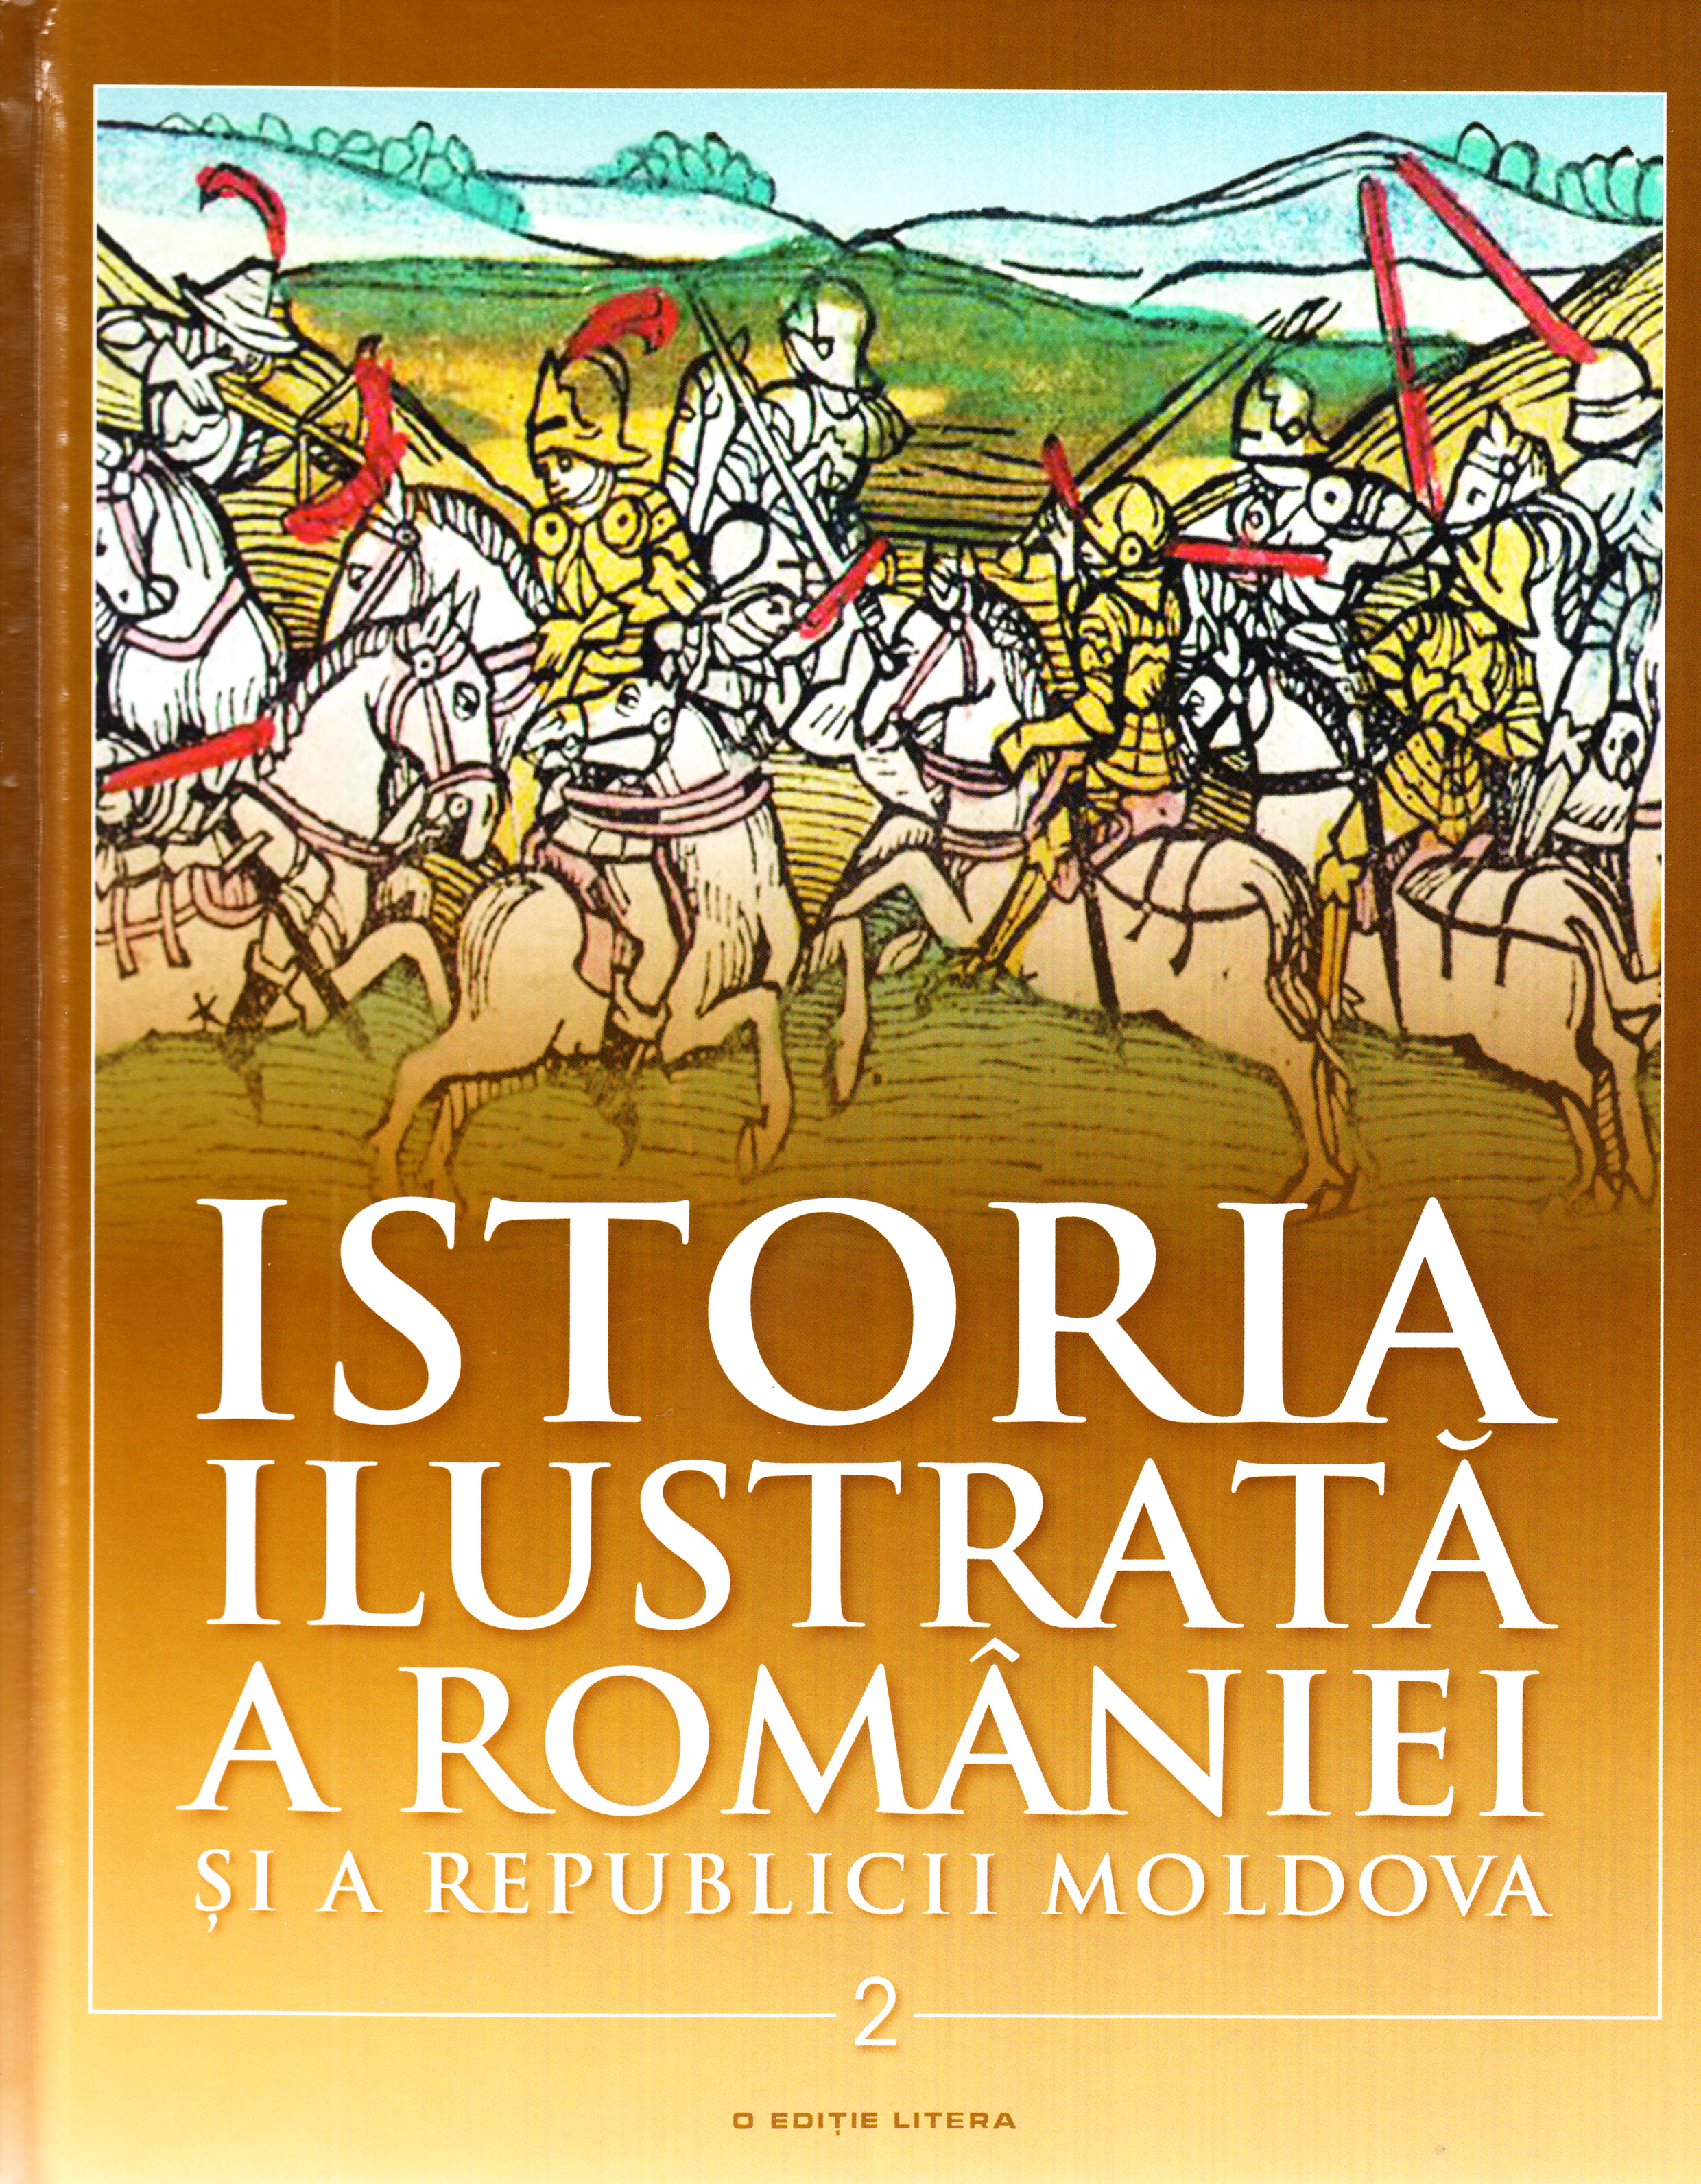 Set Istoria ilustrata a Romaniei si a Republicii Moldova (6 carti)